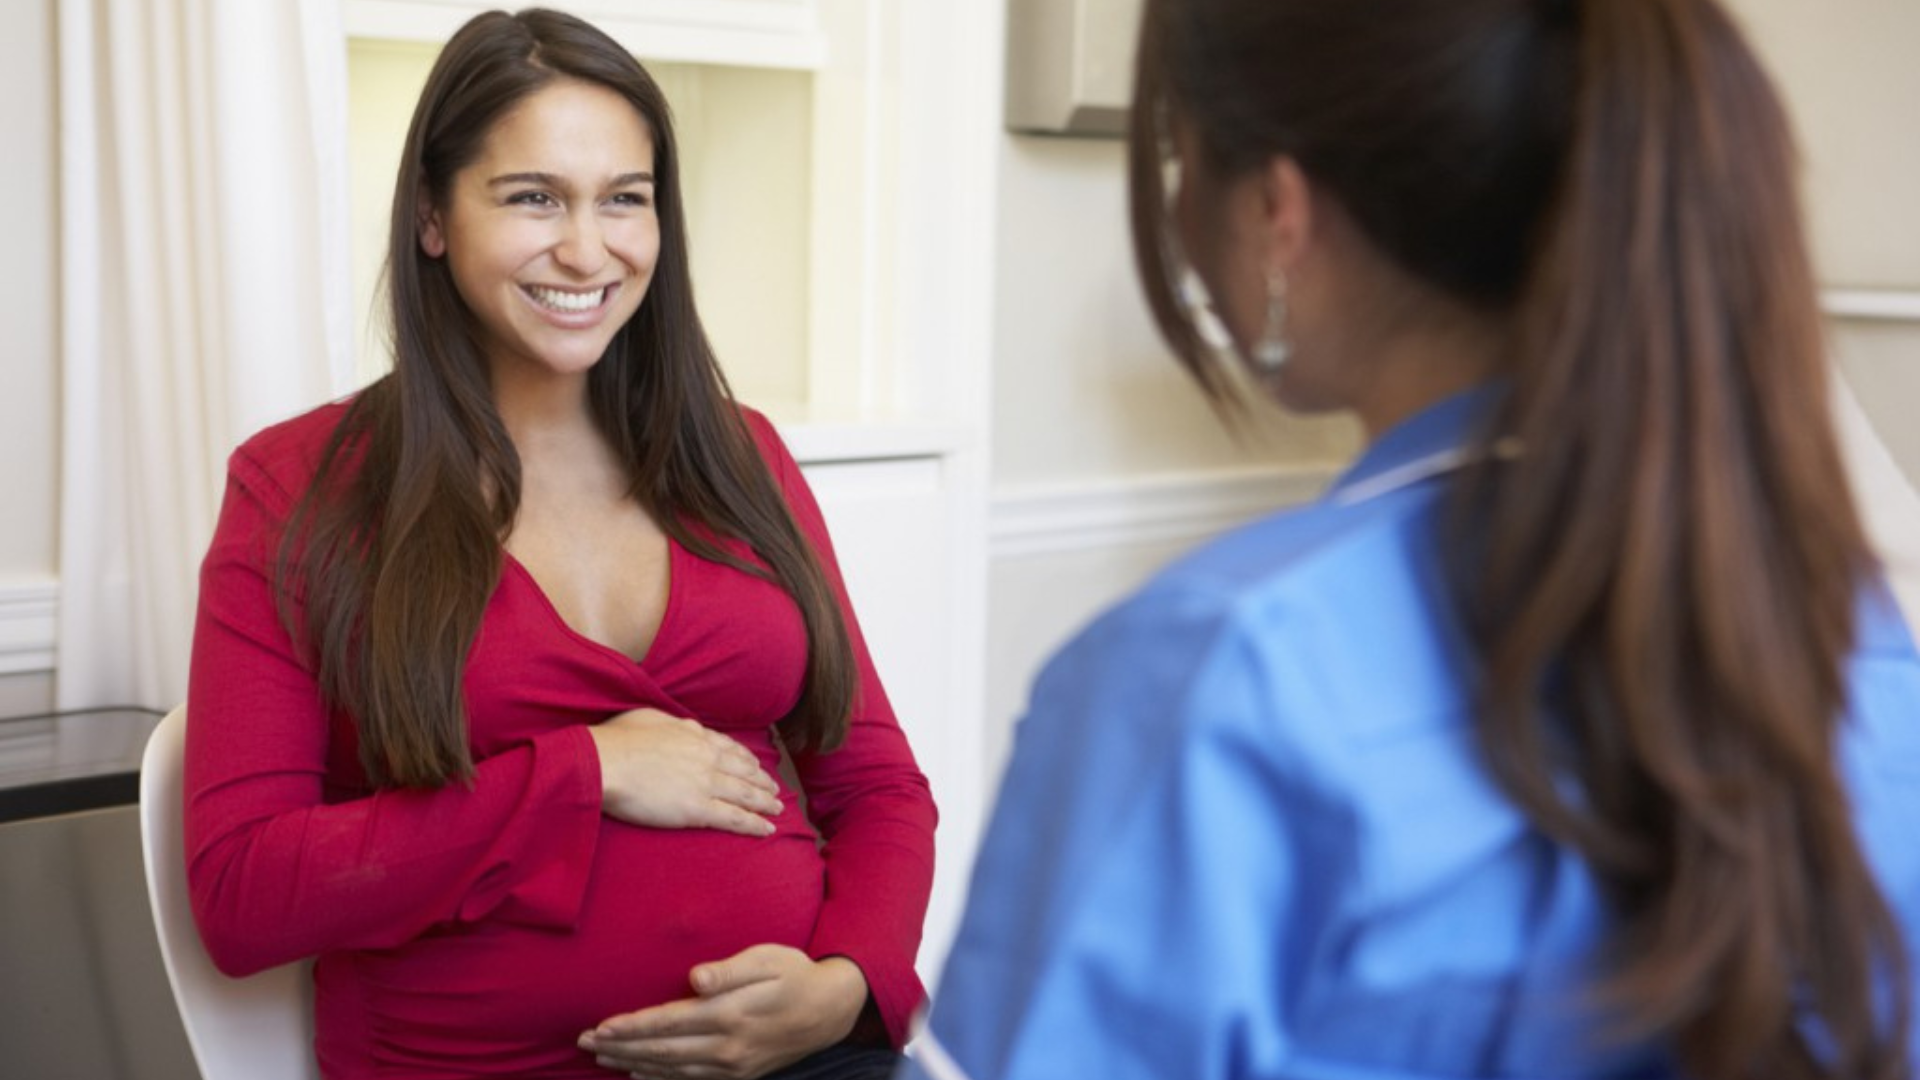 Mujer embarazada charlando con otra mujer.